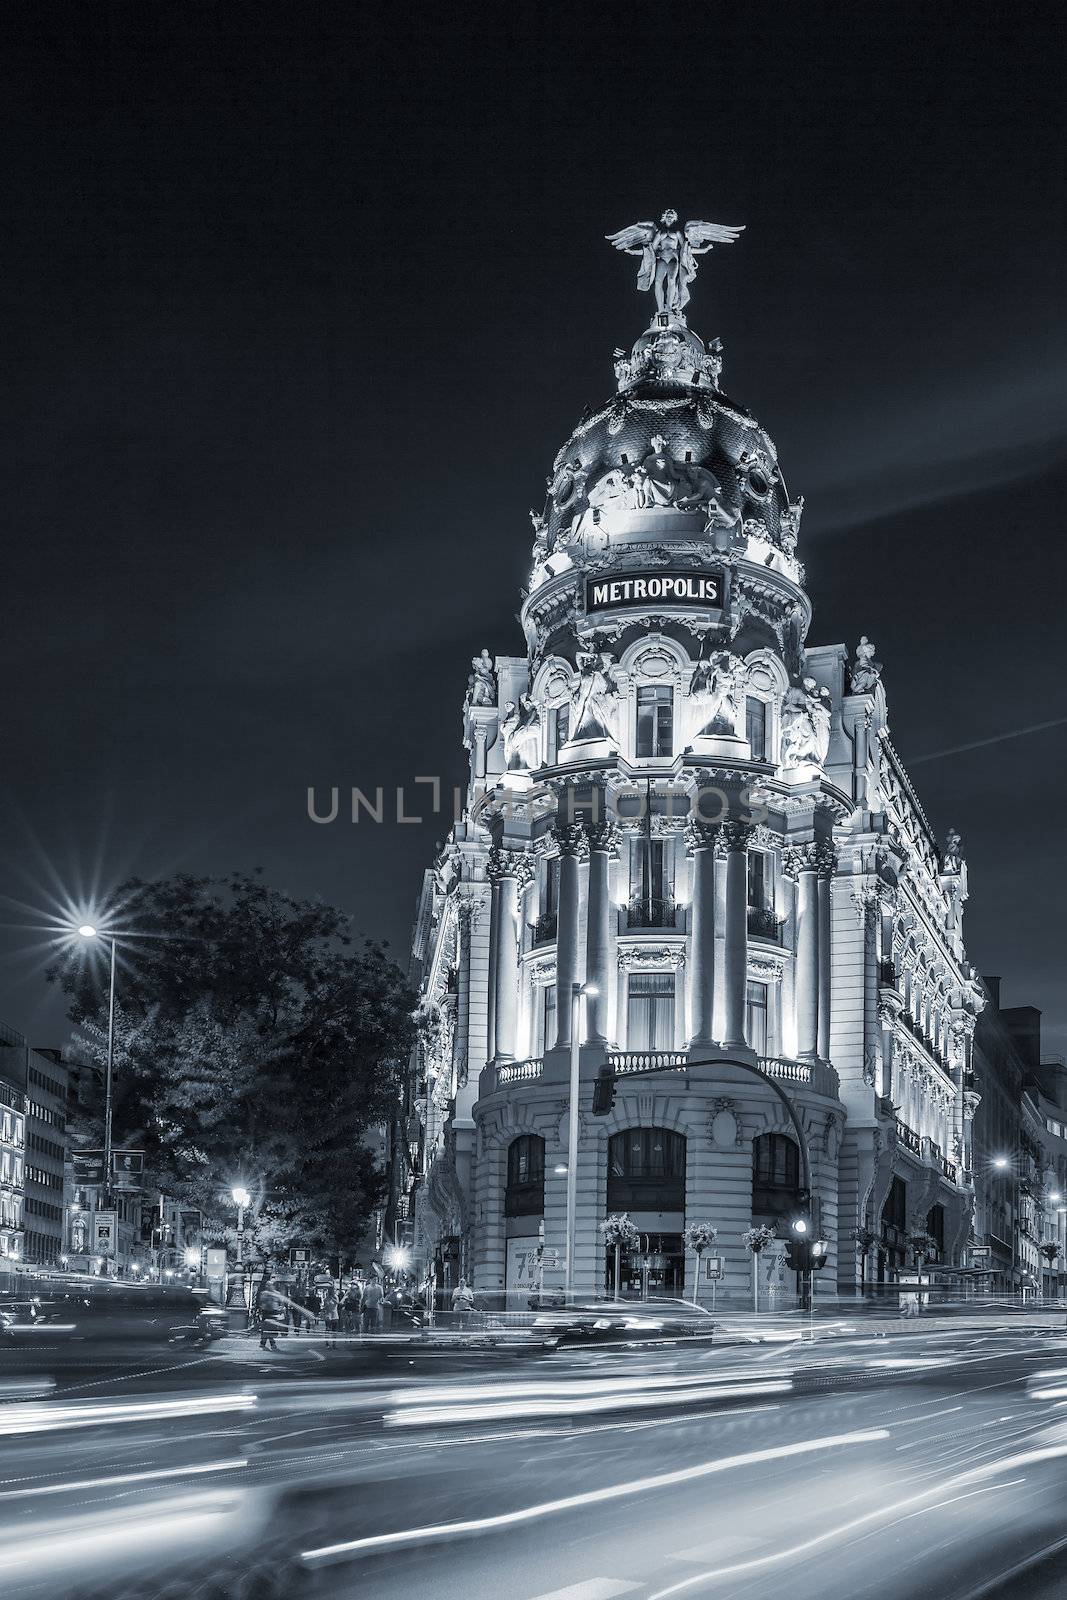 Gran via street, main shopping street in Madrid at night. Spain, Europe.